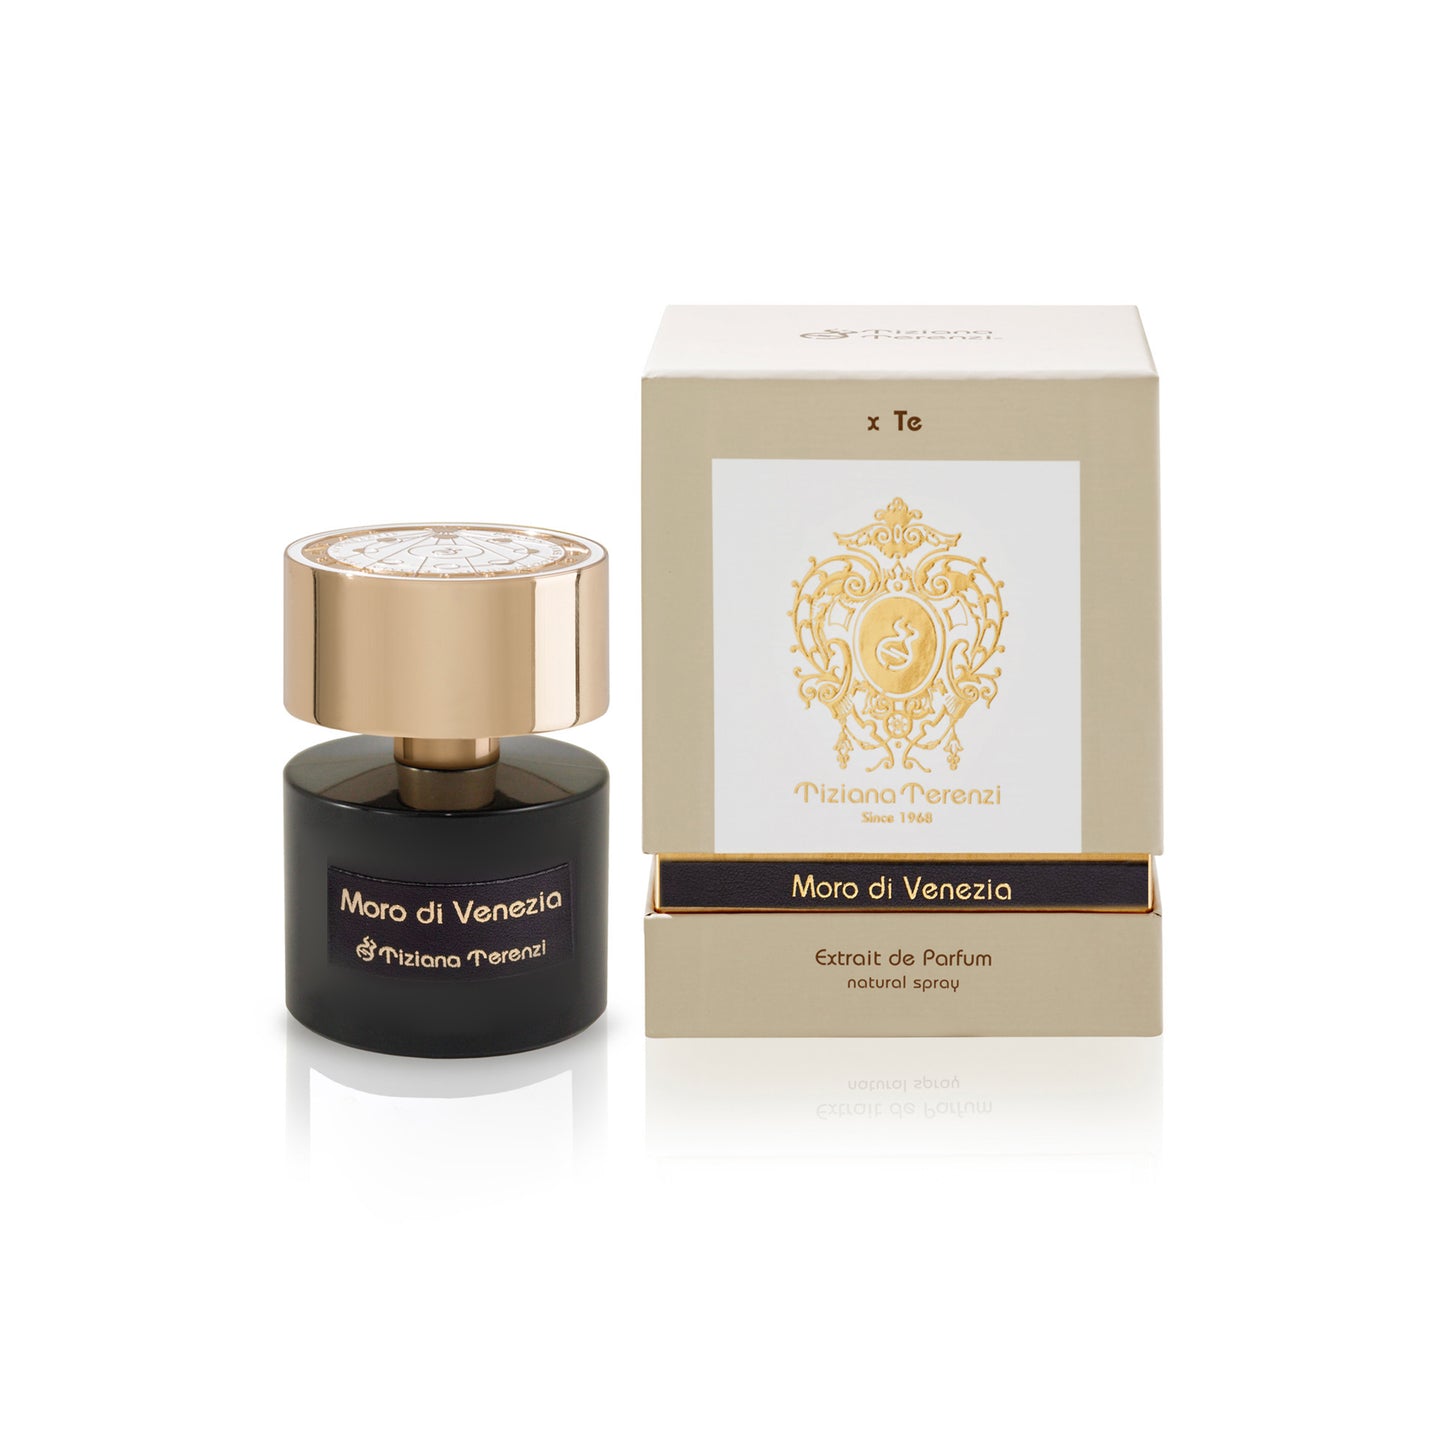 Luna Moro de Venezia 1.5ml Sample Vial - Extrait de Parfum